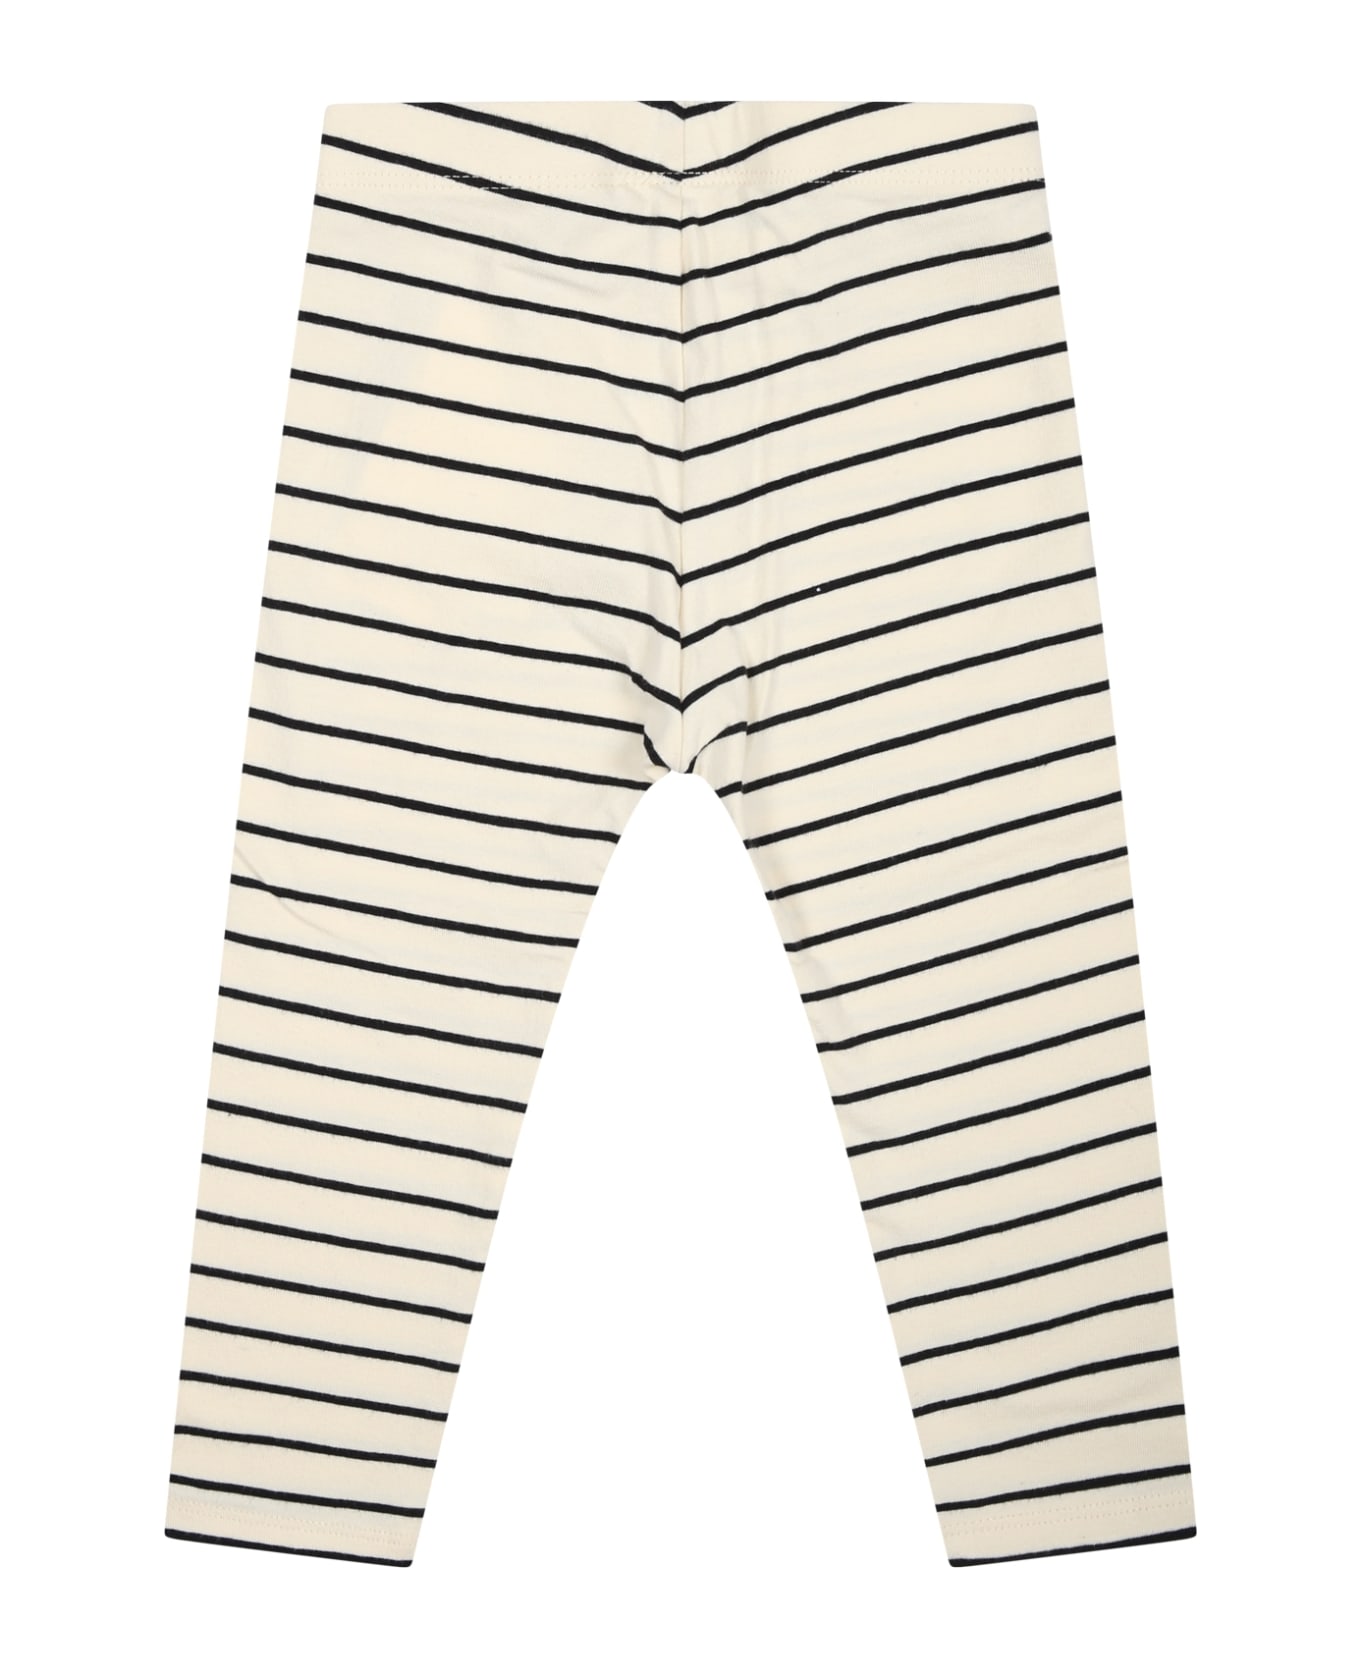 Calvin Klein Striped Multicolor Legging For Baby Kids With Logo - Multicolor